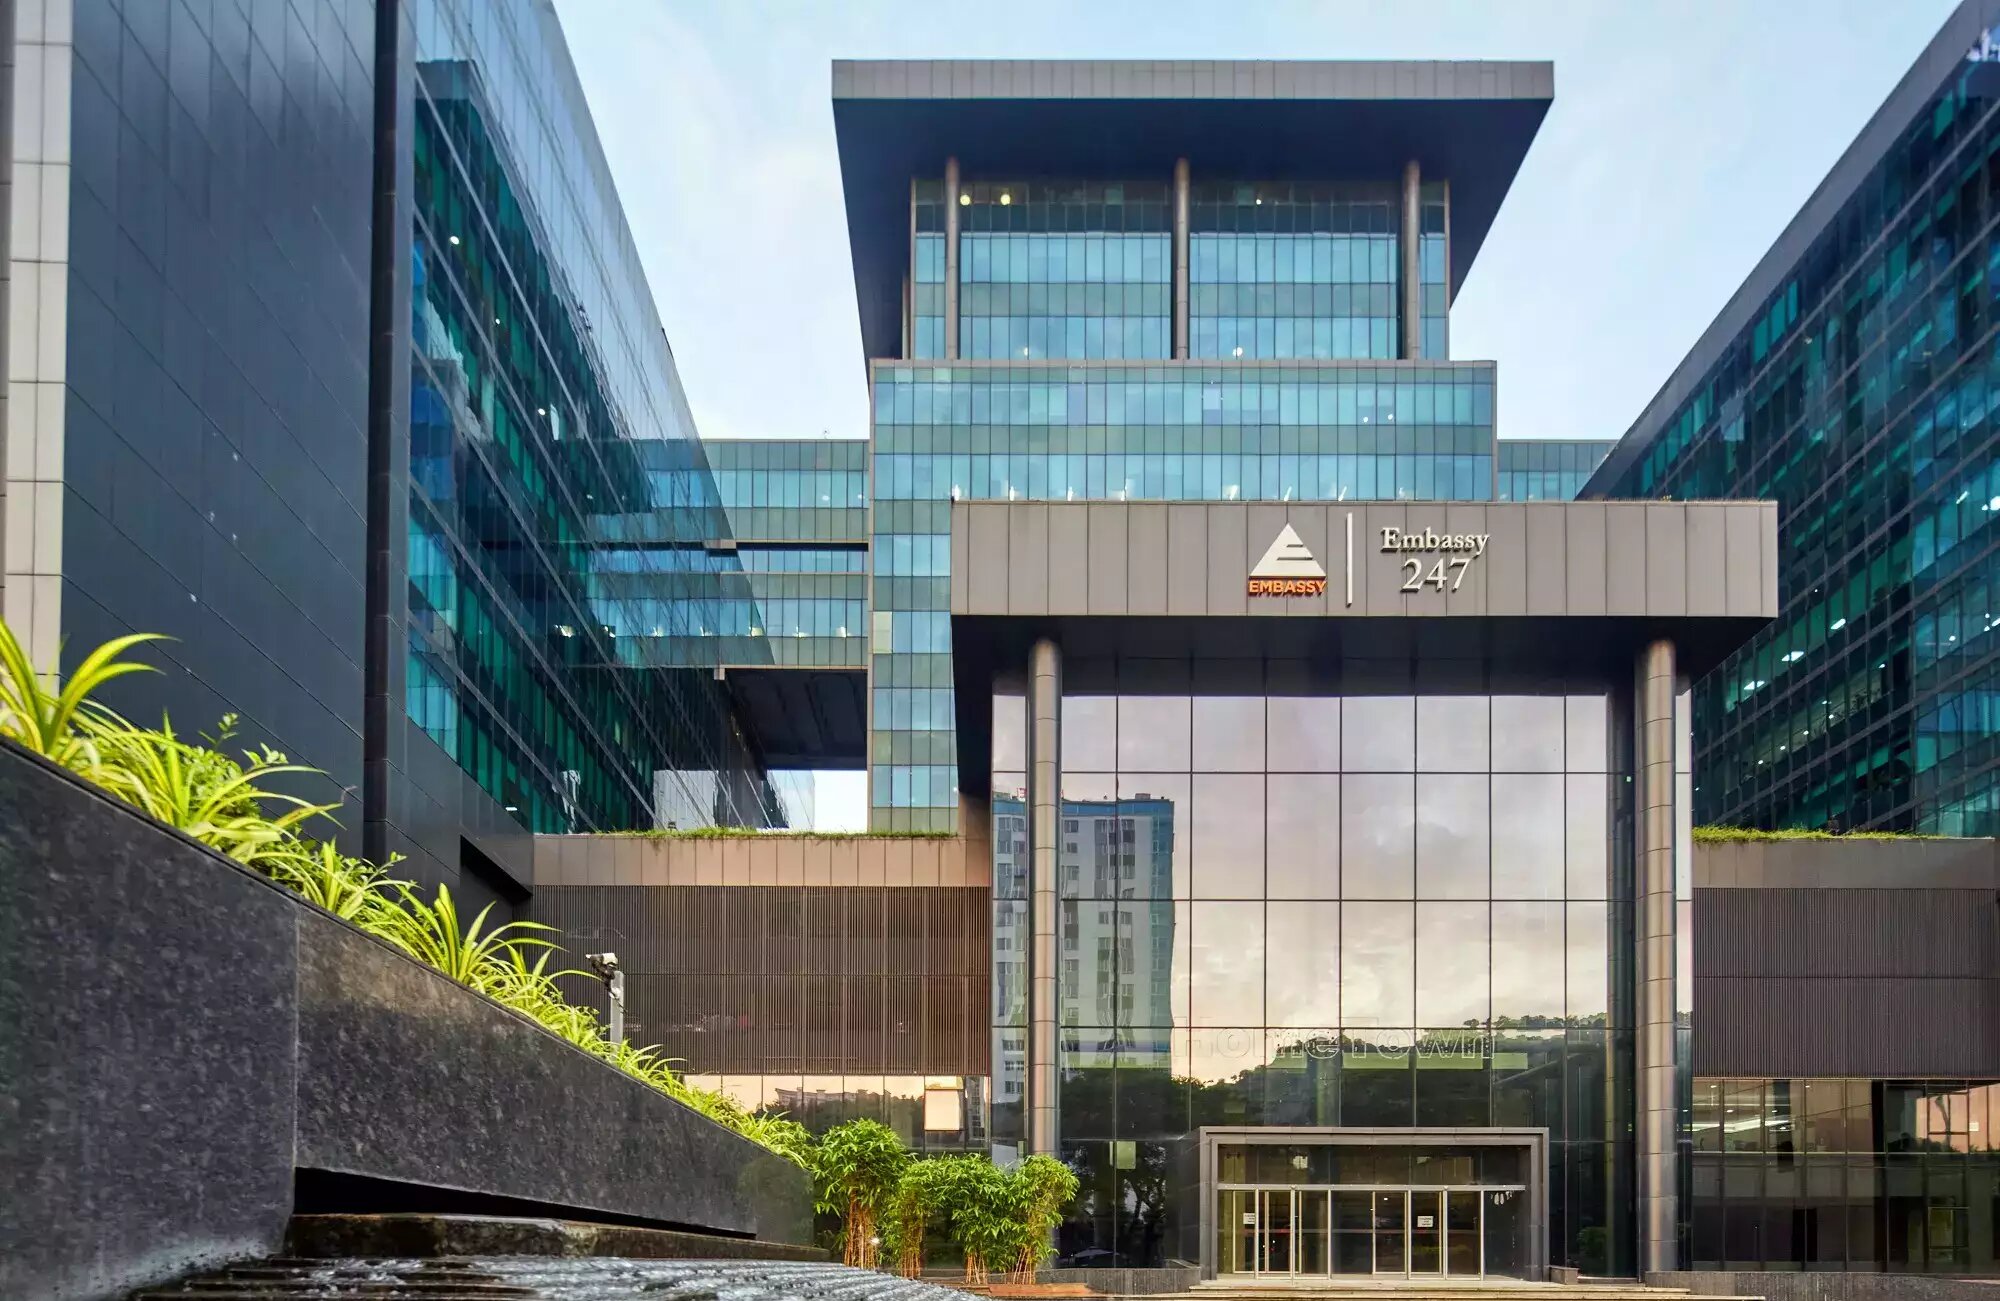 SMFG India Credit leases 1,94,000 sq ft at Embassy 247 in Mumbai